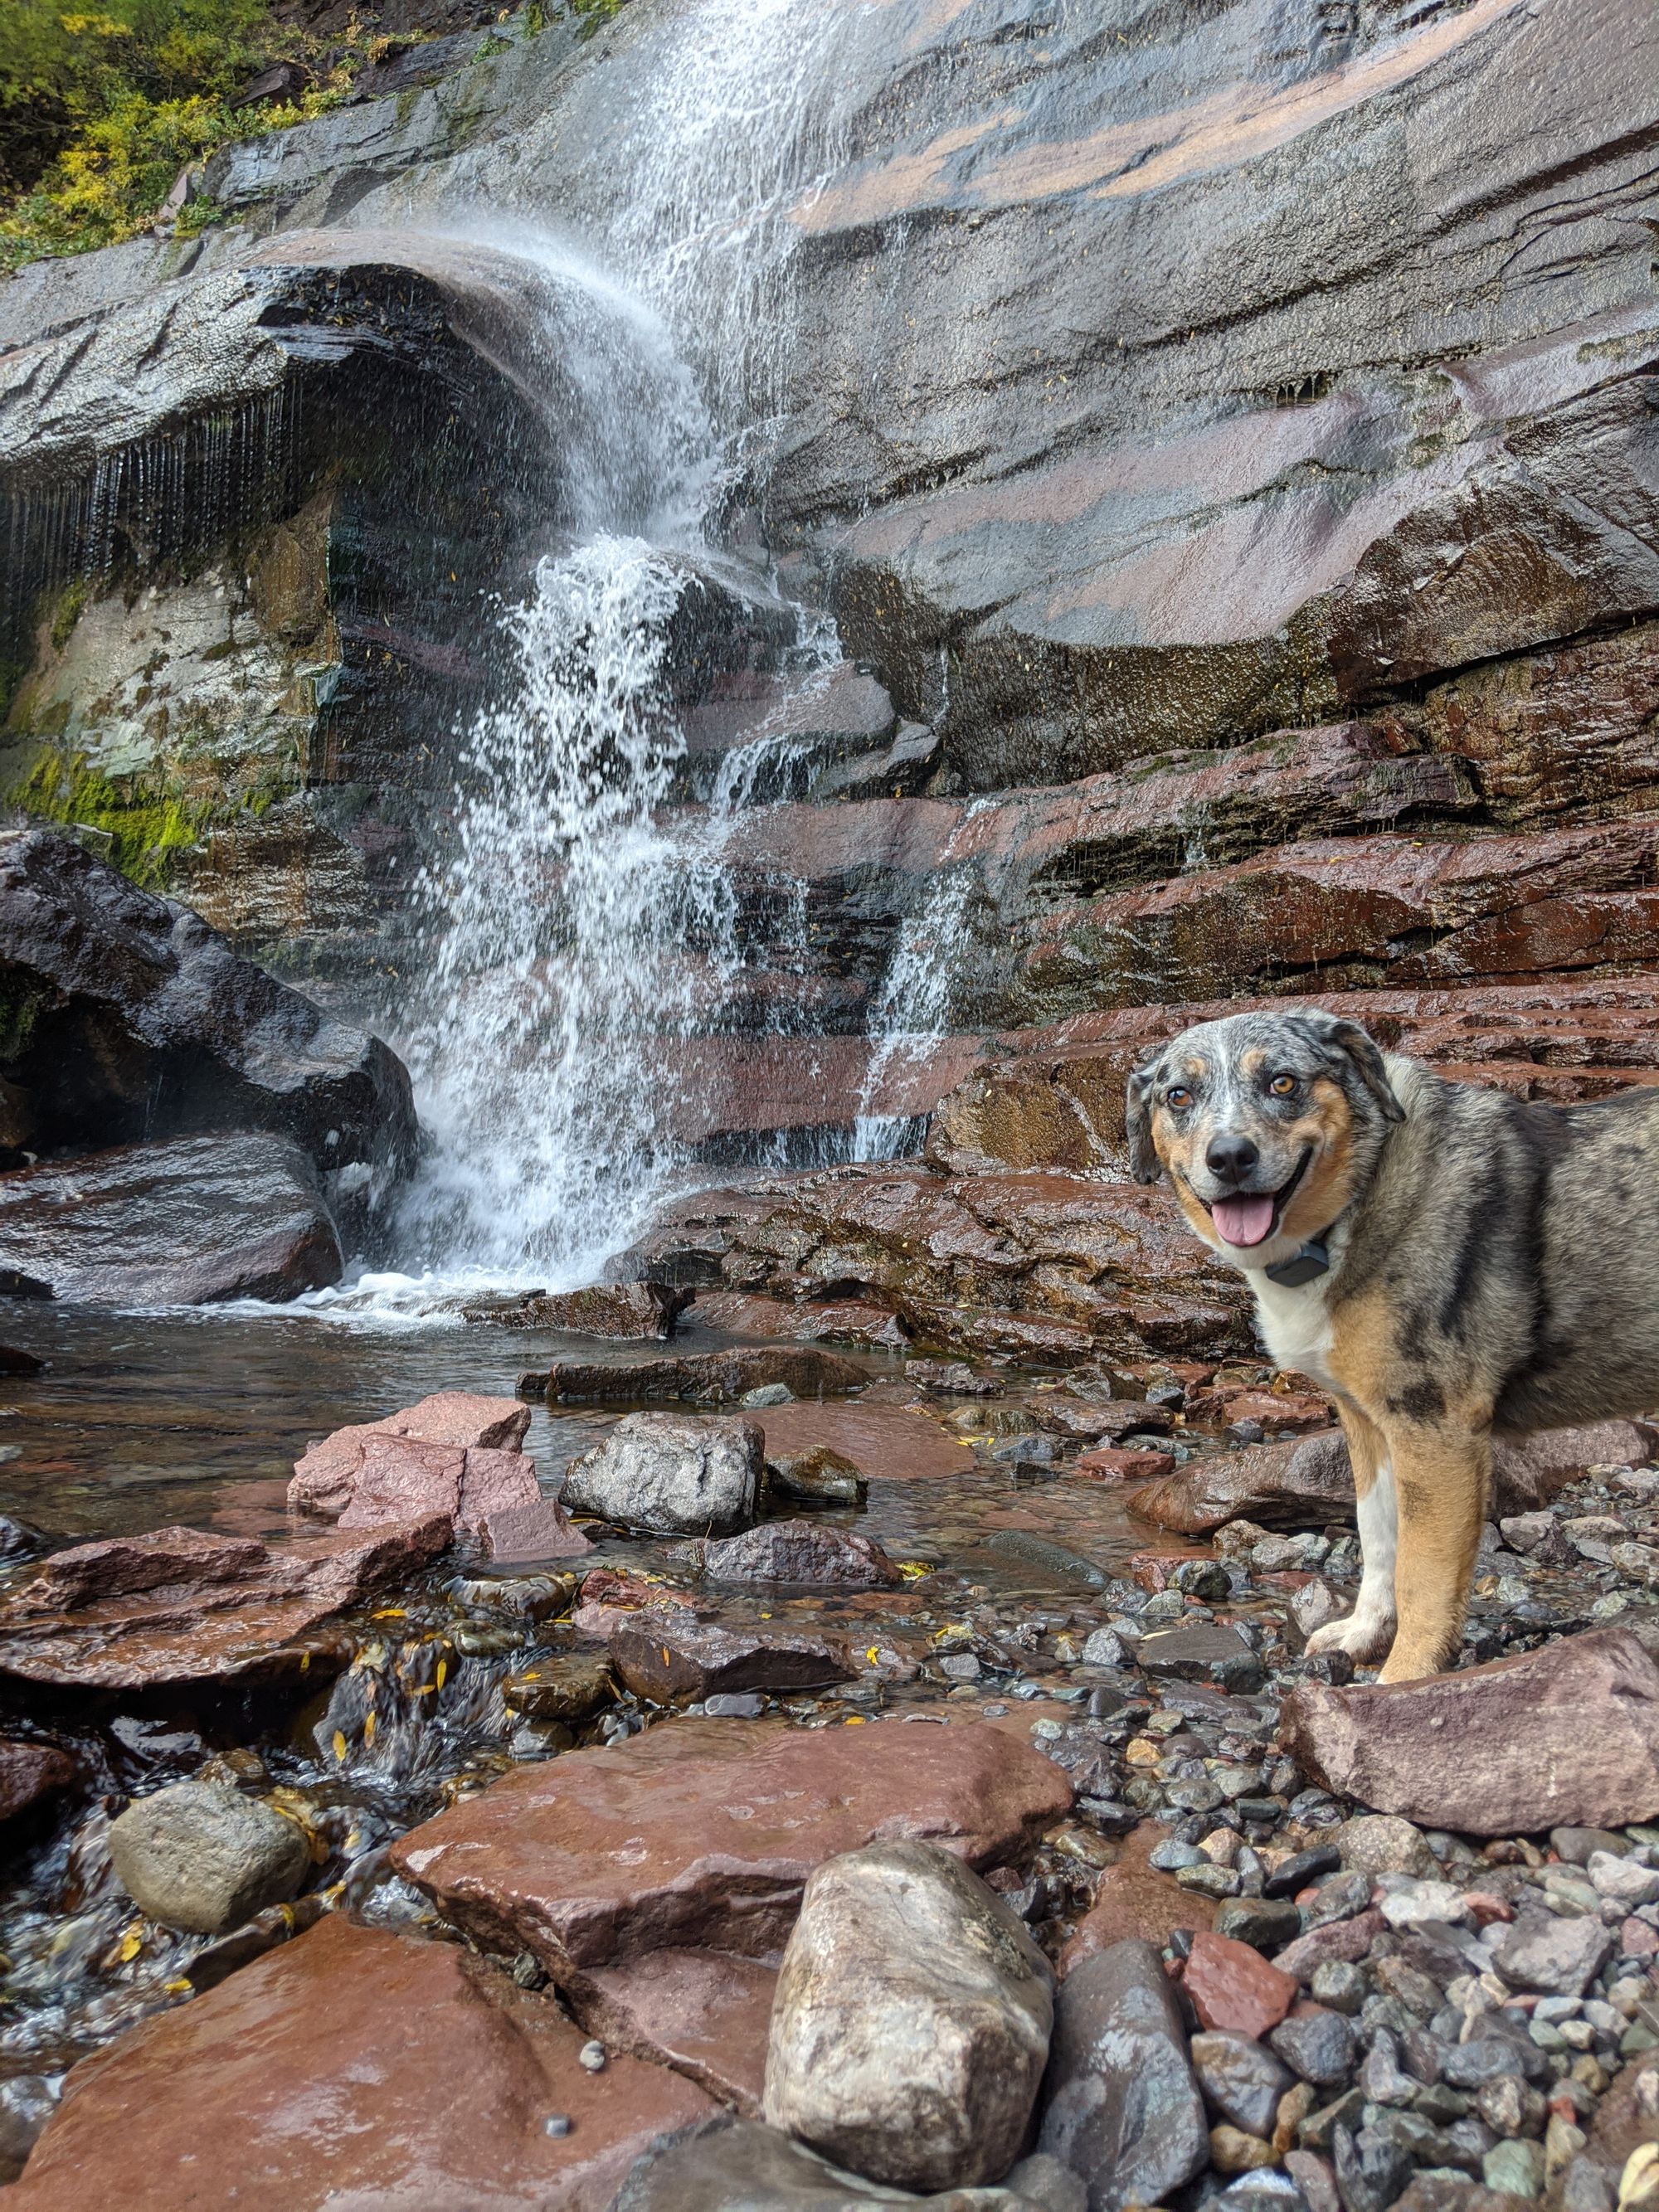 A Dog-Friendly Visit to Telluride, Colorado